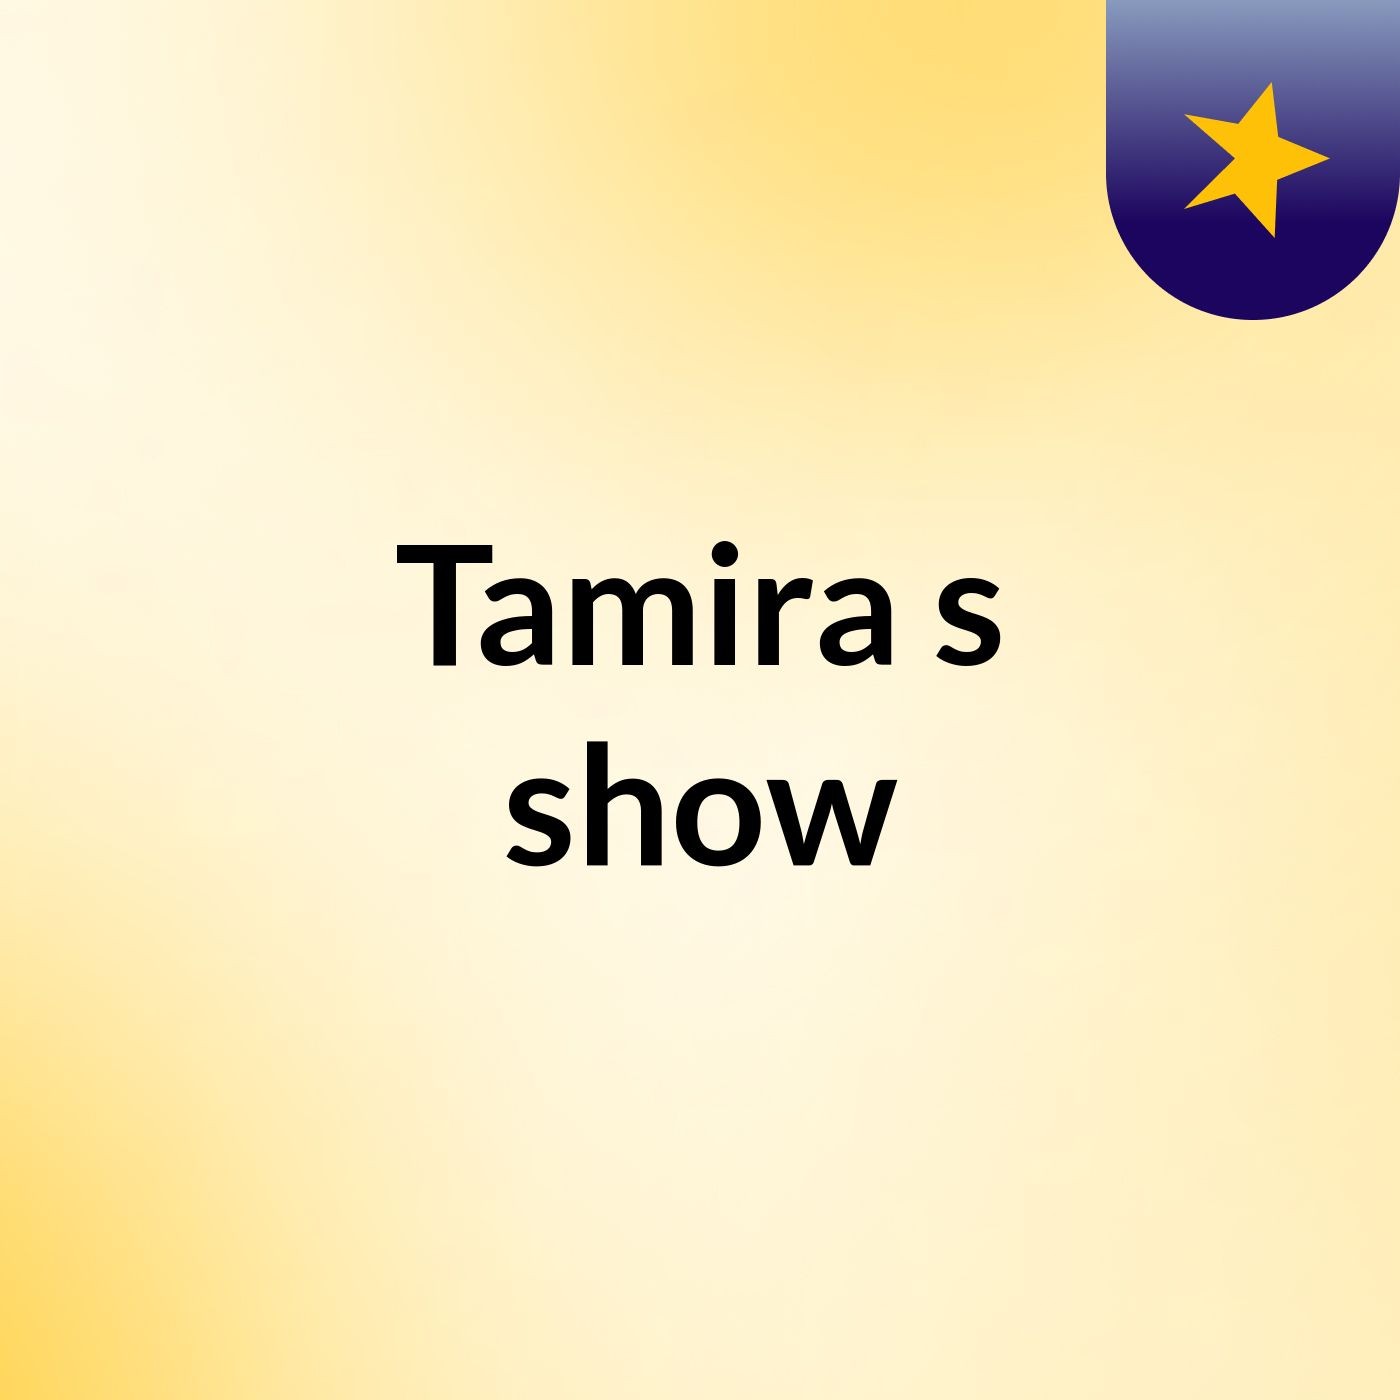 Tamira's show